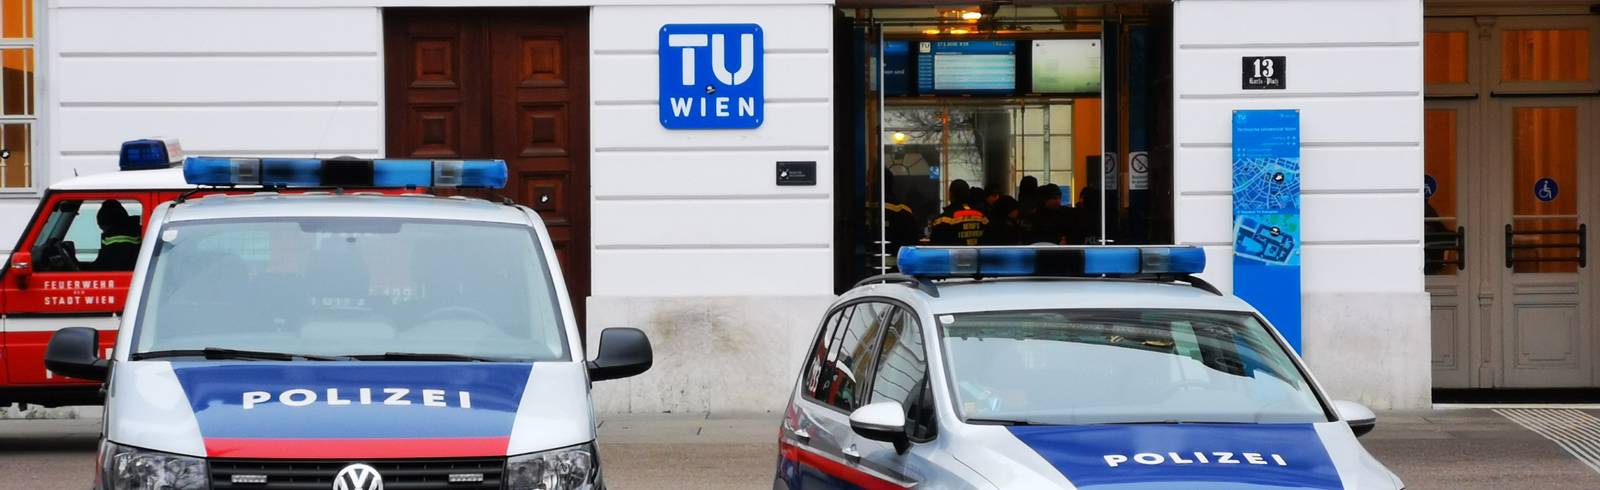 W24-Bezirksflash: Bombenalarm an der TU Wien